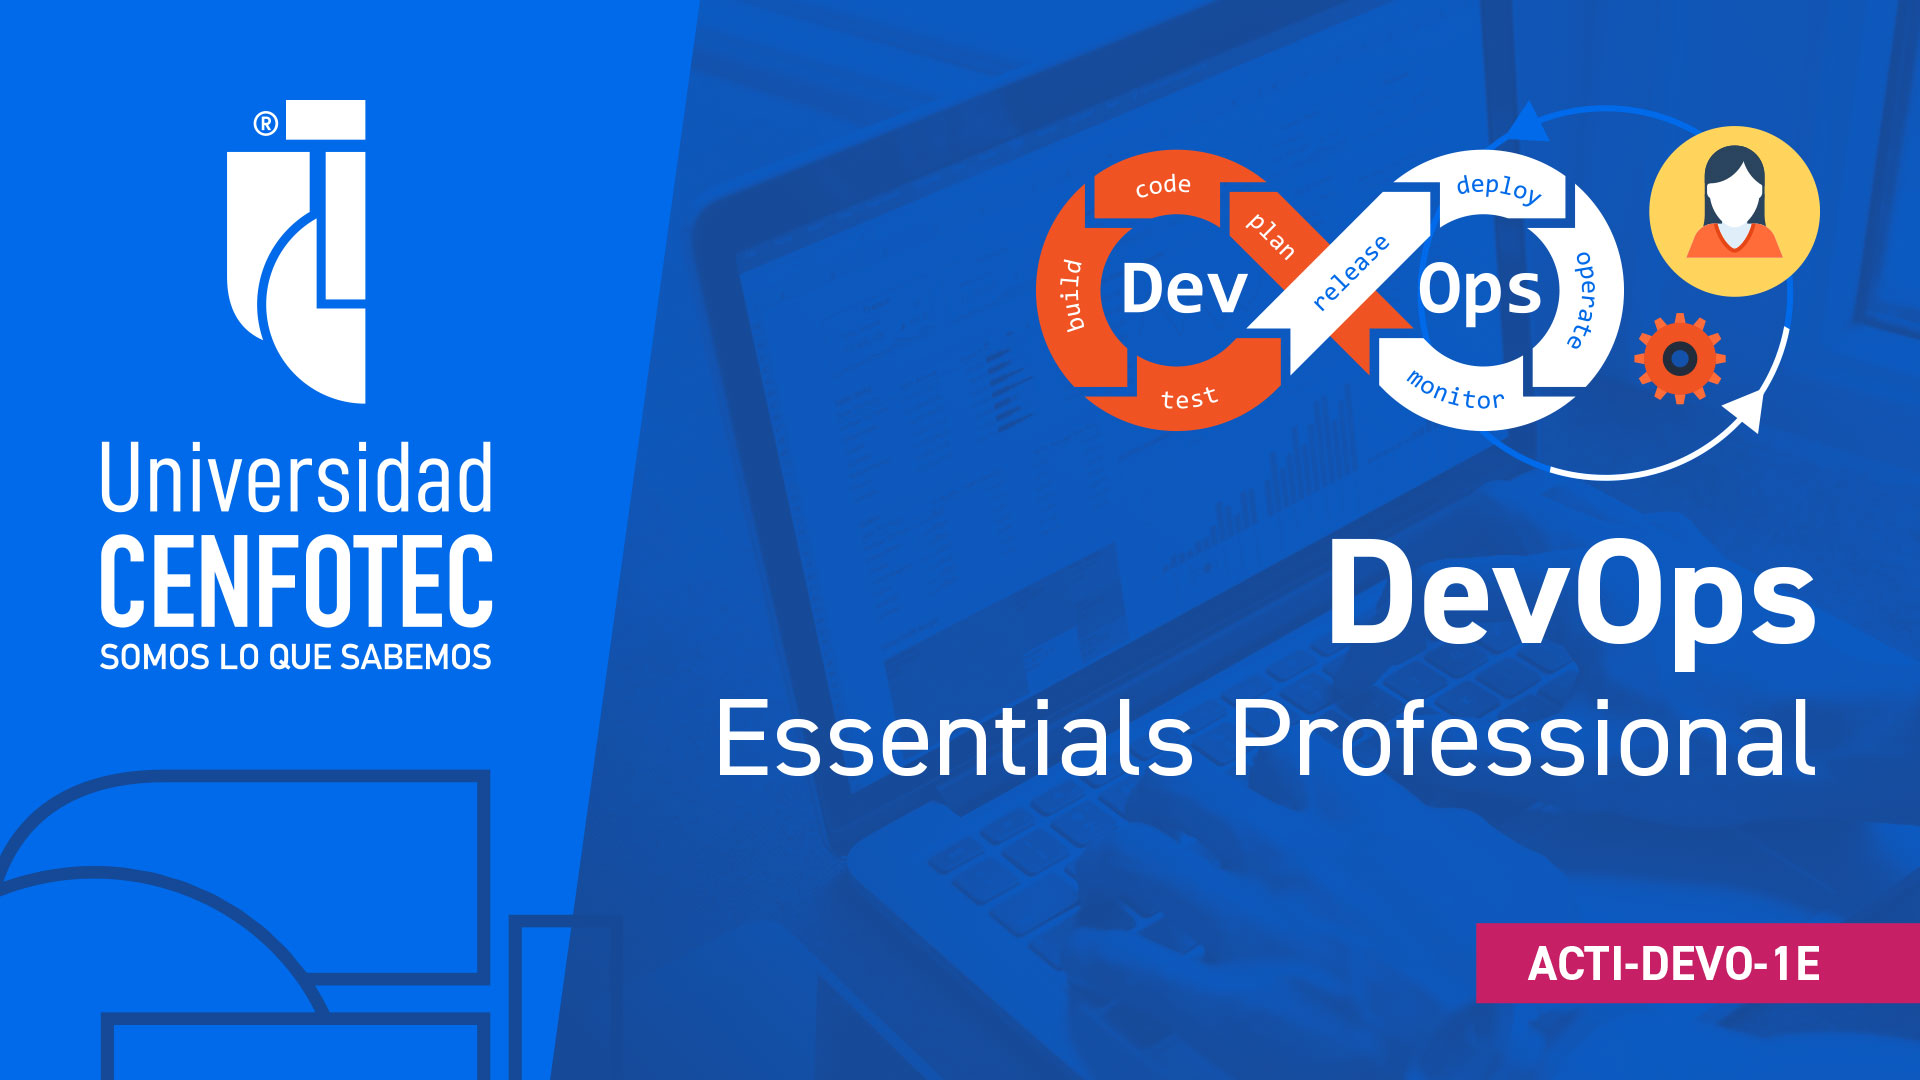 Devops Essentials Professional Certificate con examen de certificación